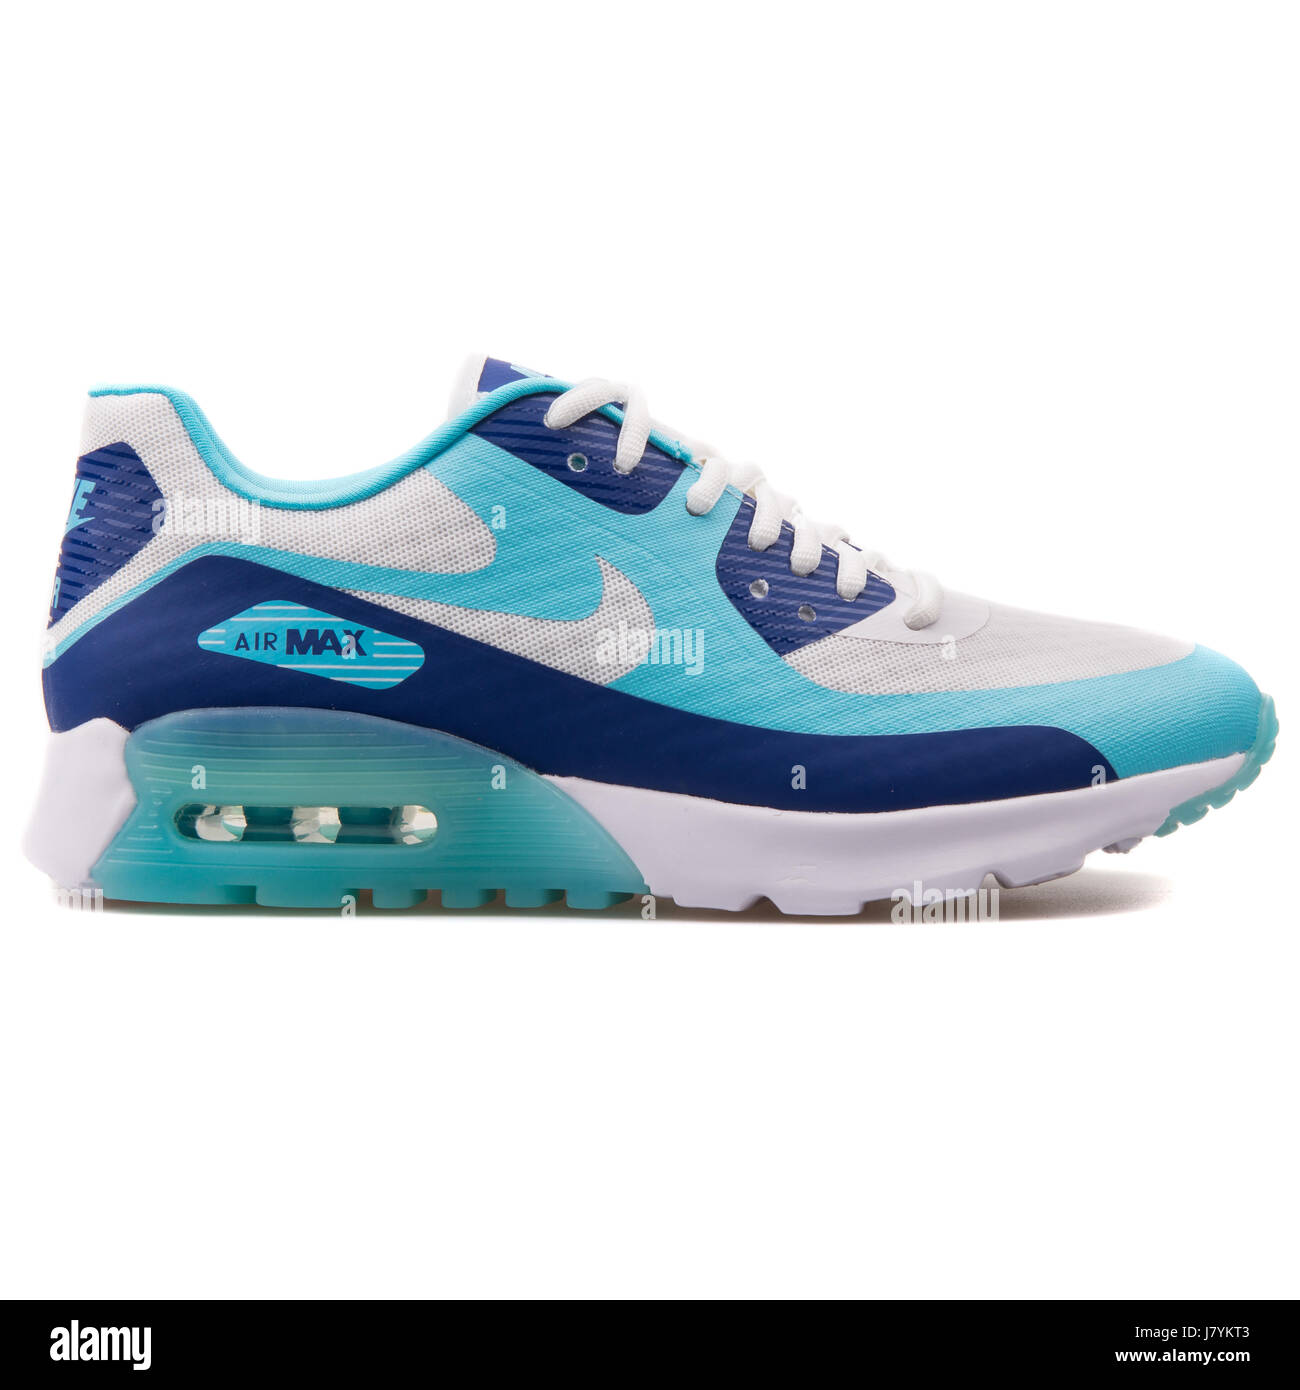 Nike Air Max 90 W BR Ultra Deep bleu royal, turquoise et blanc Women's  Running Sneakers - 725061-400 Photo Stock - Alamy